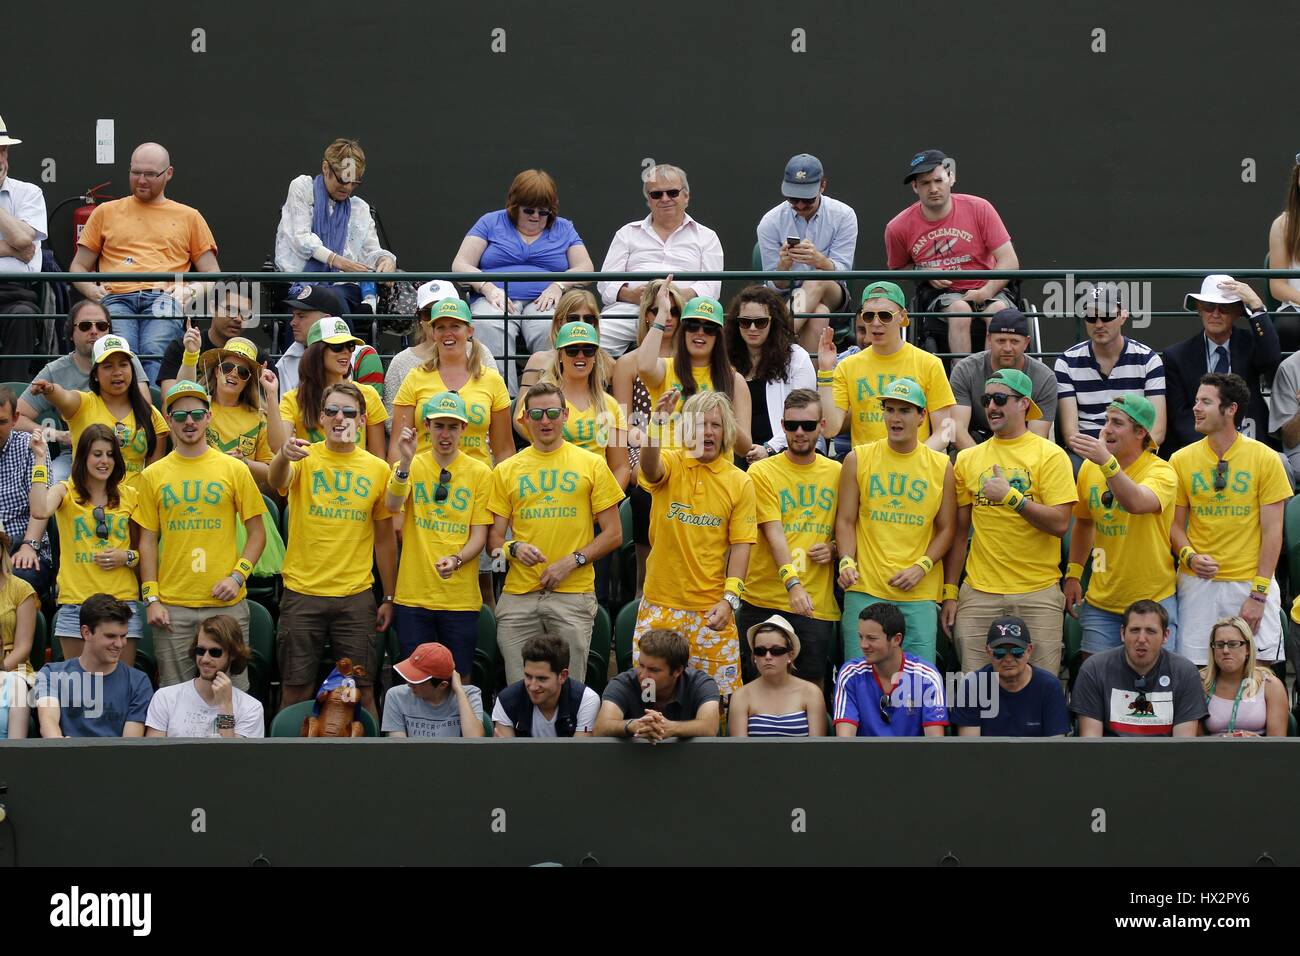 Los aficionados al tenis en Australia el Campeonato de Wimbledon 20 del All England Club de Tenis de Wimbledon en Londres, Inglaterra, 29 de junio de 2015 Foto de stock